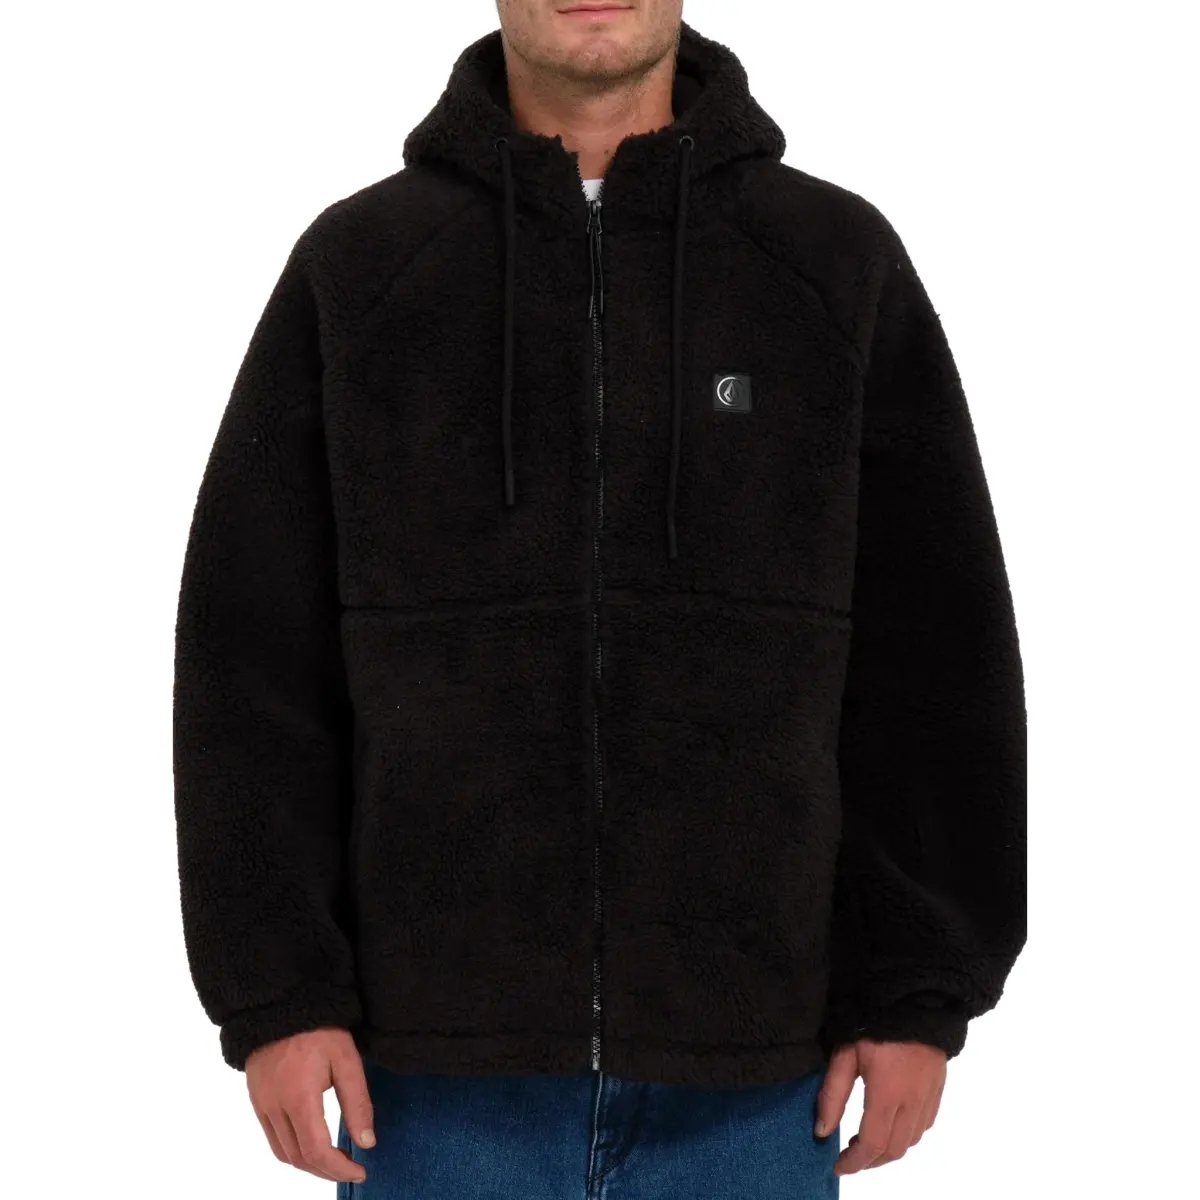 Volcom arstone zip fleece black